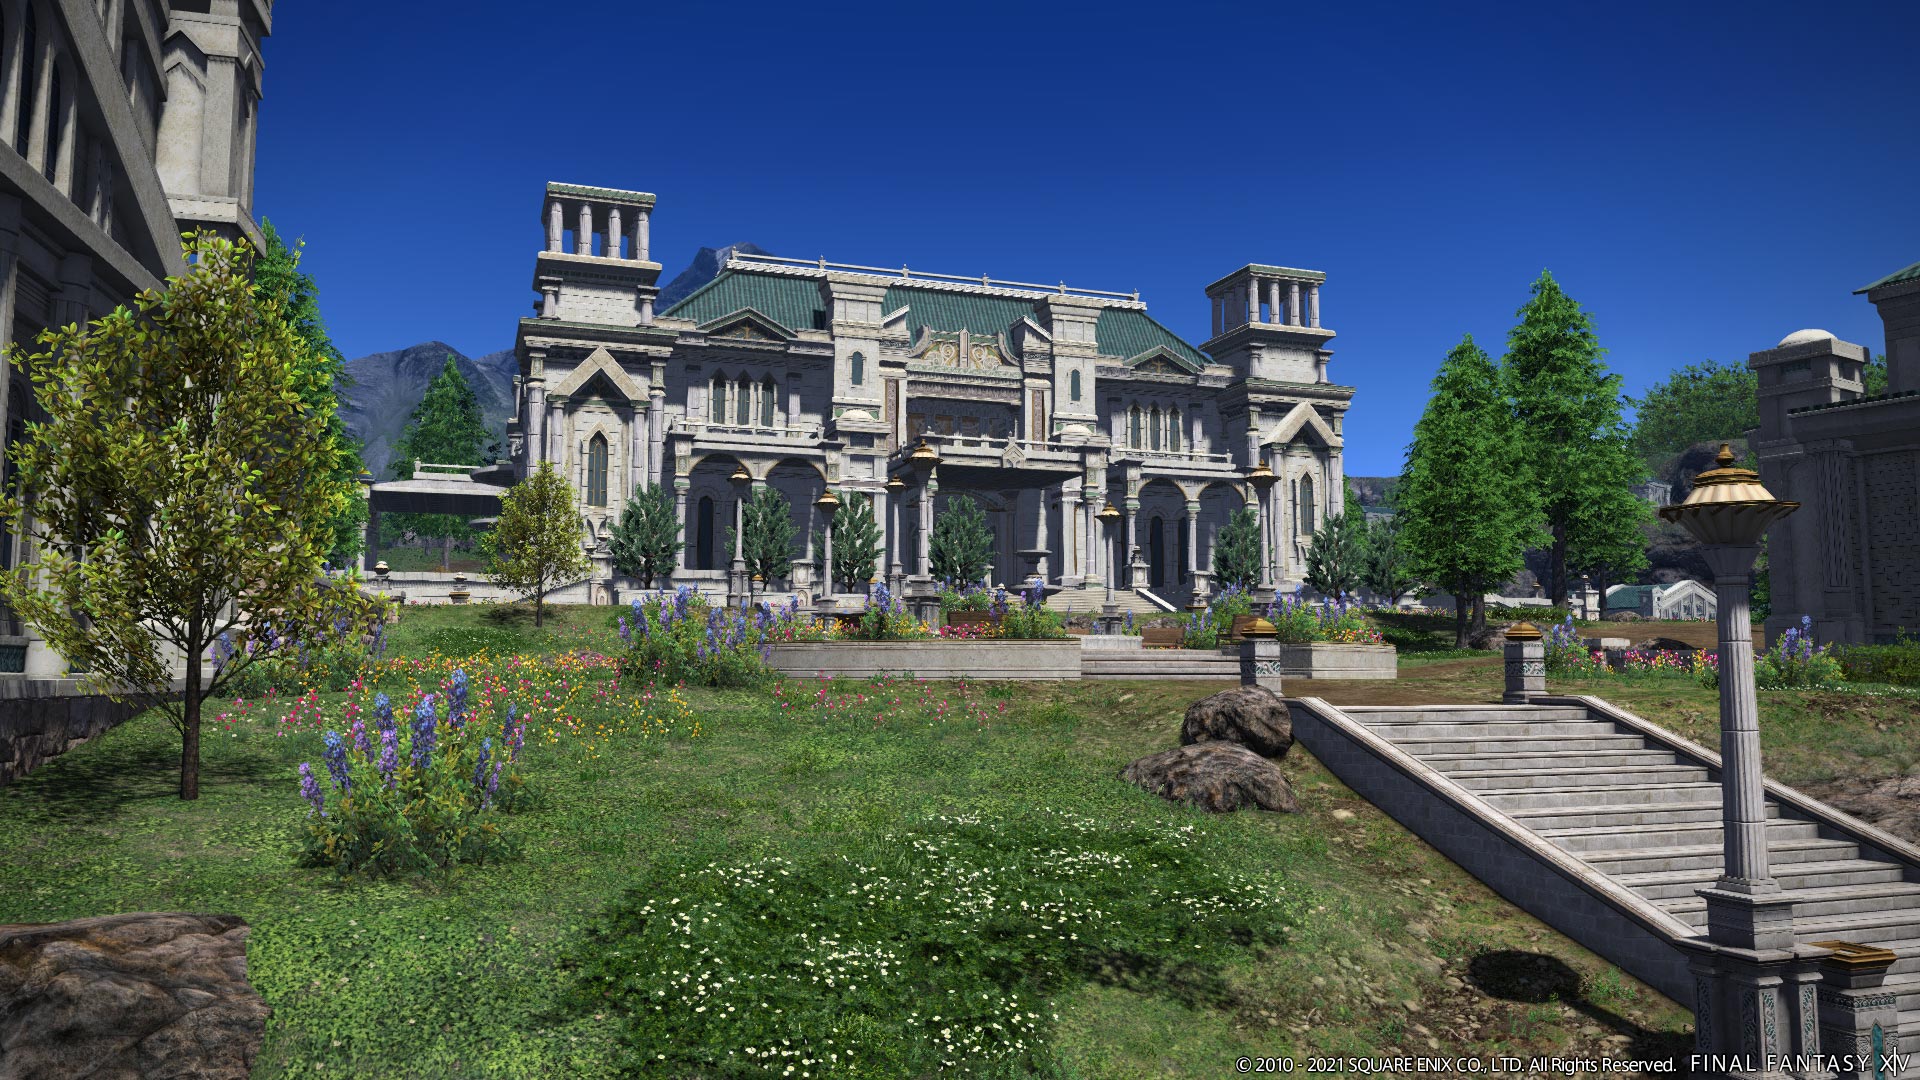 Final Fantasy XIV Found A Virtual Solution to The Housing Crisis ...